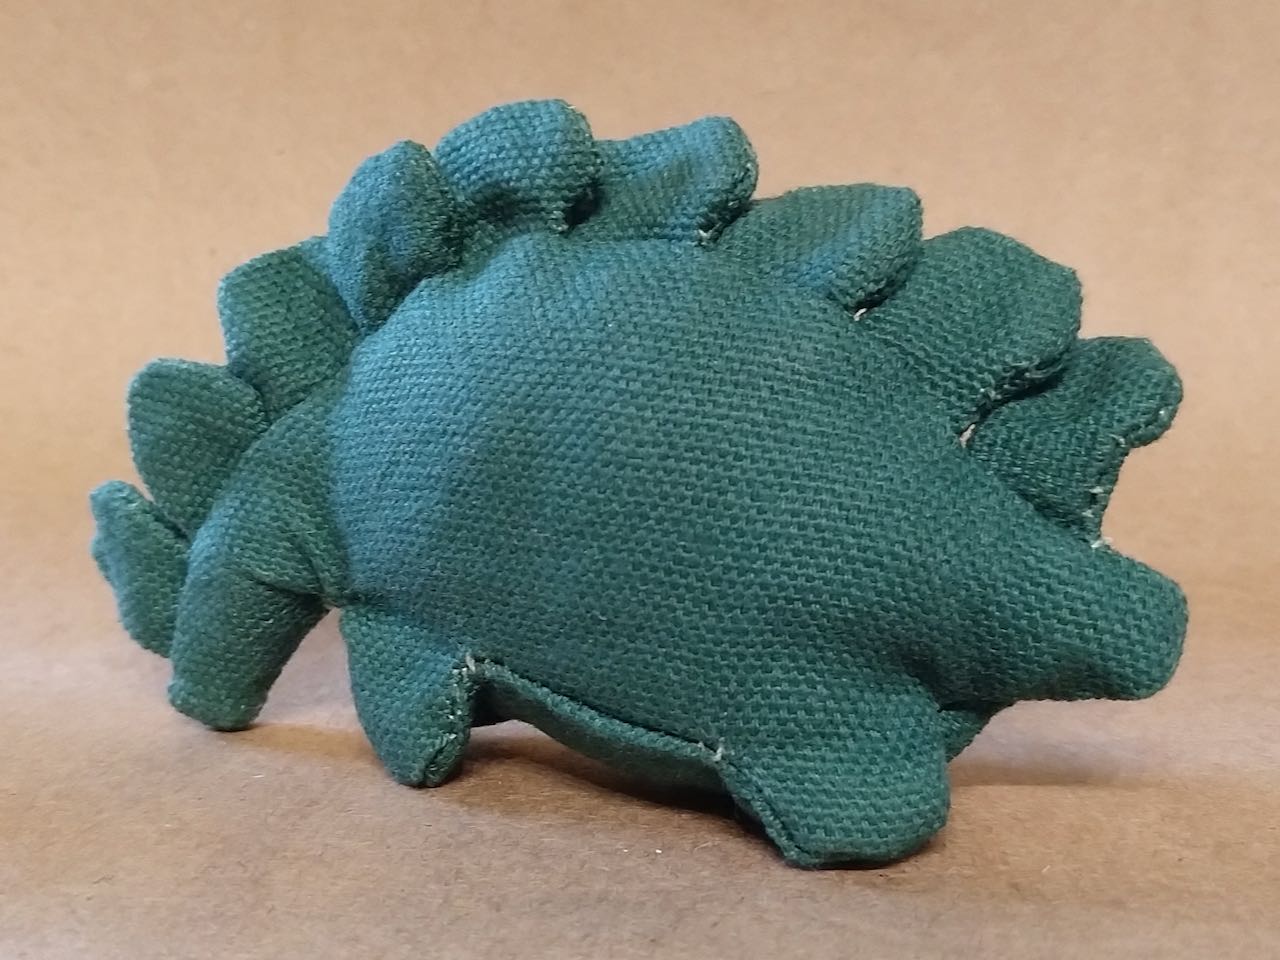 a small stegosaurus plushie